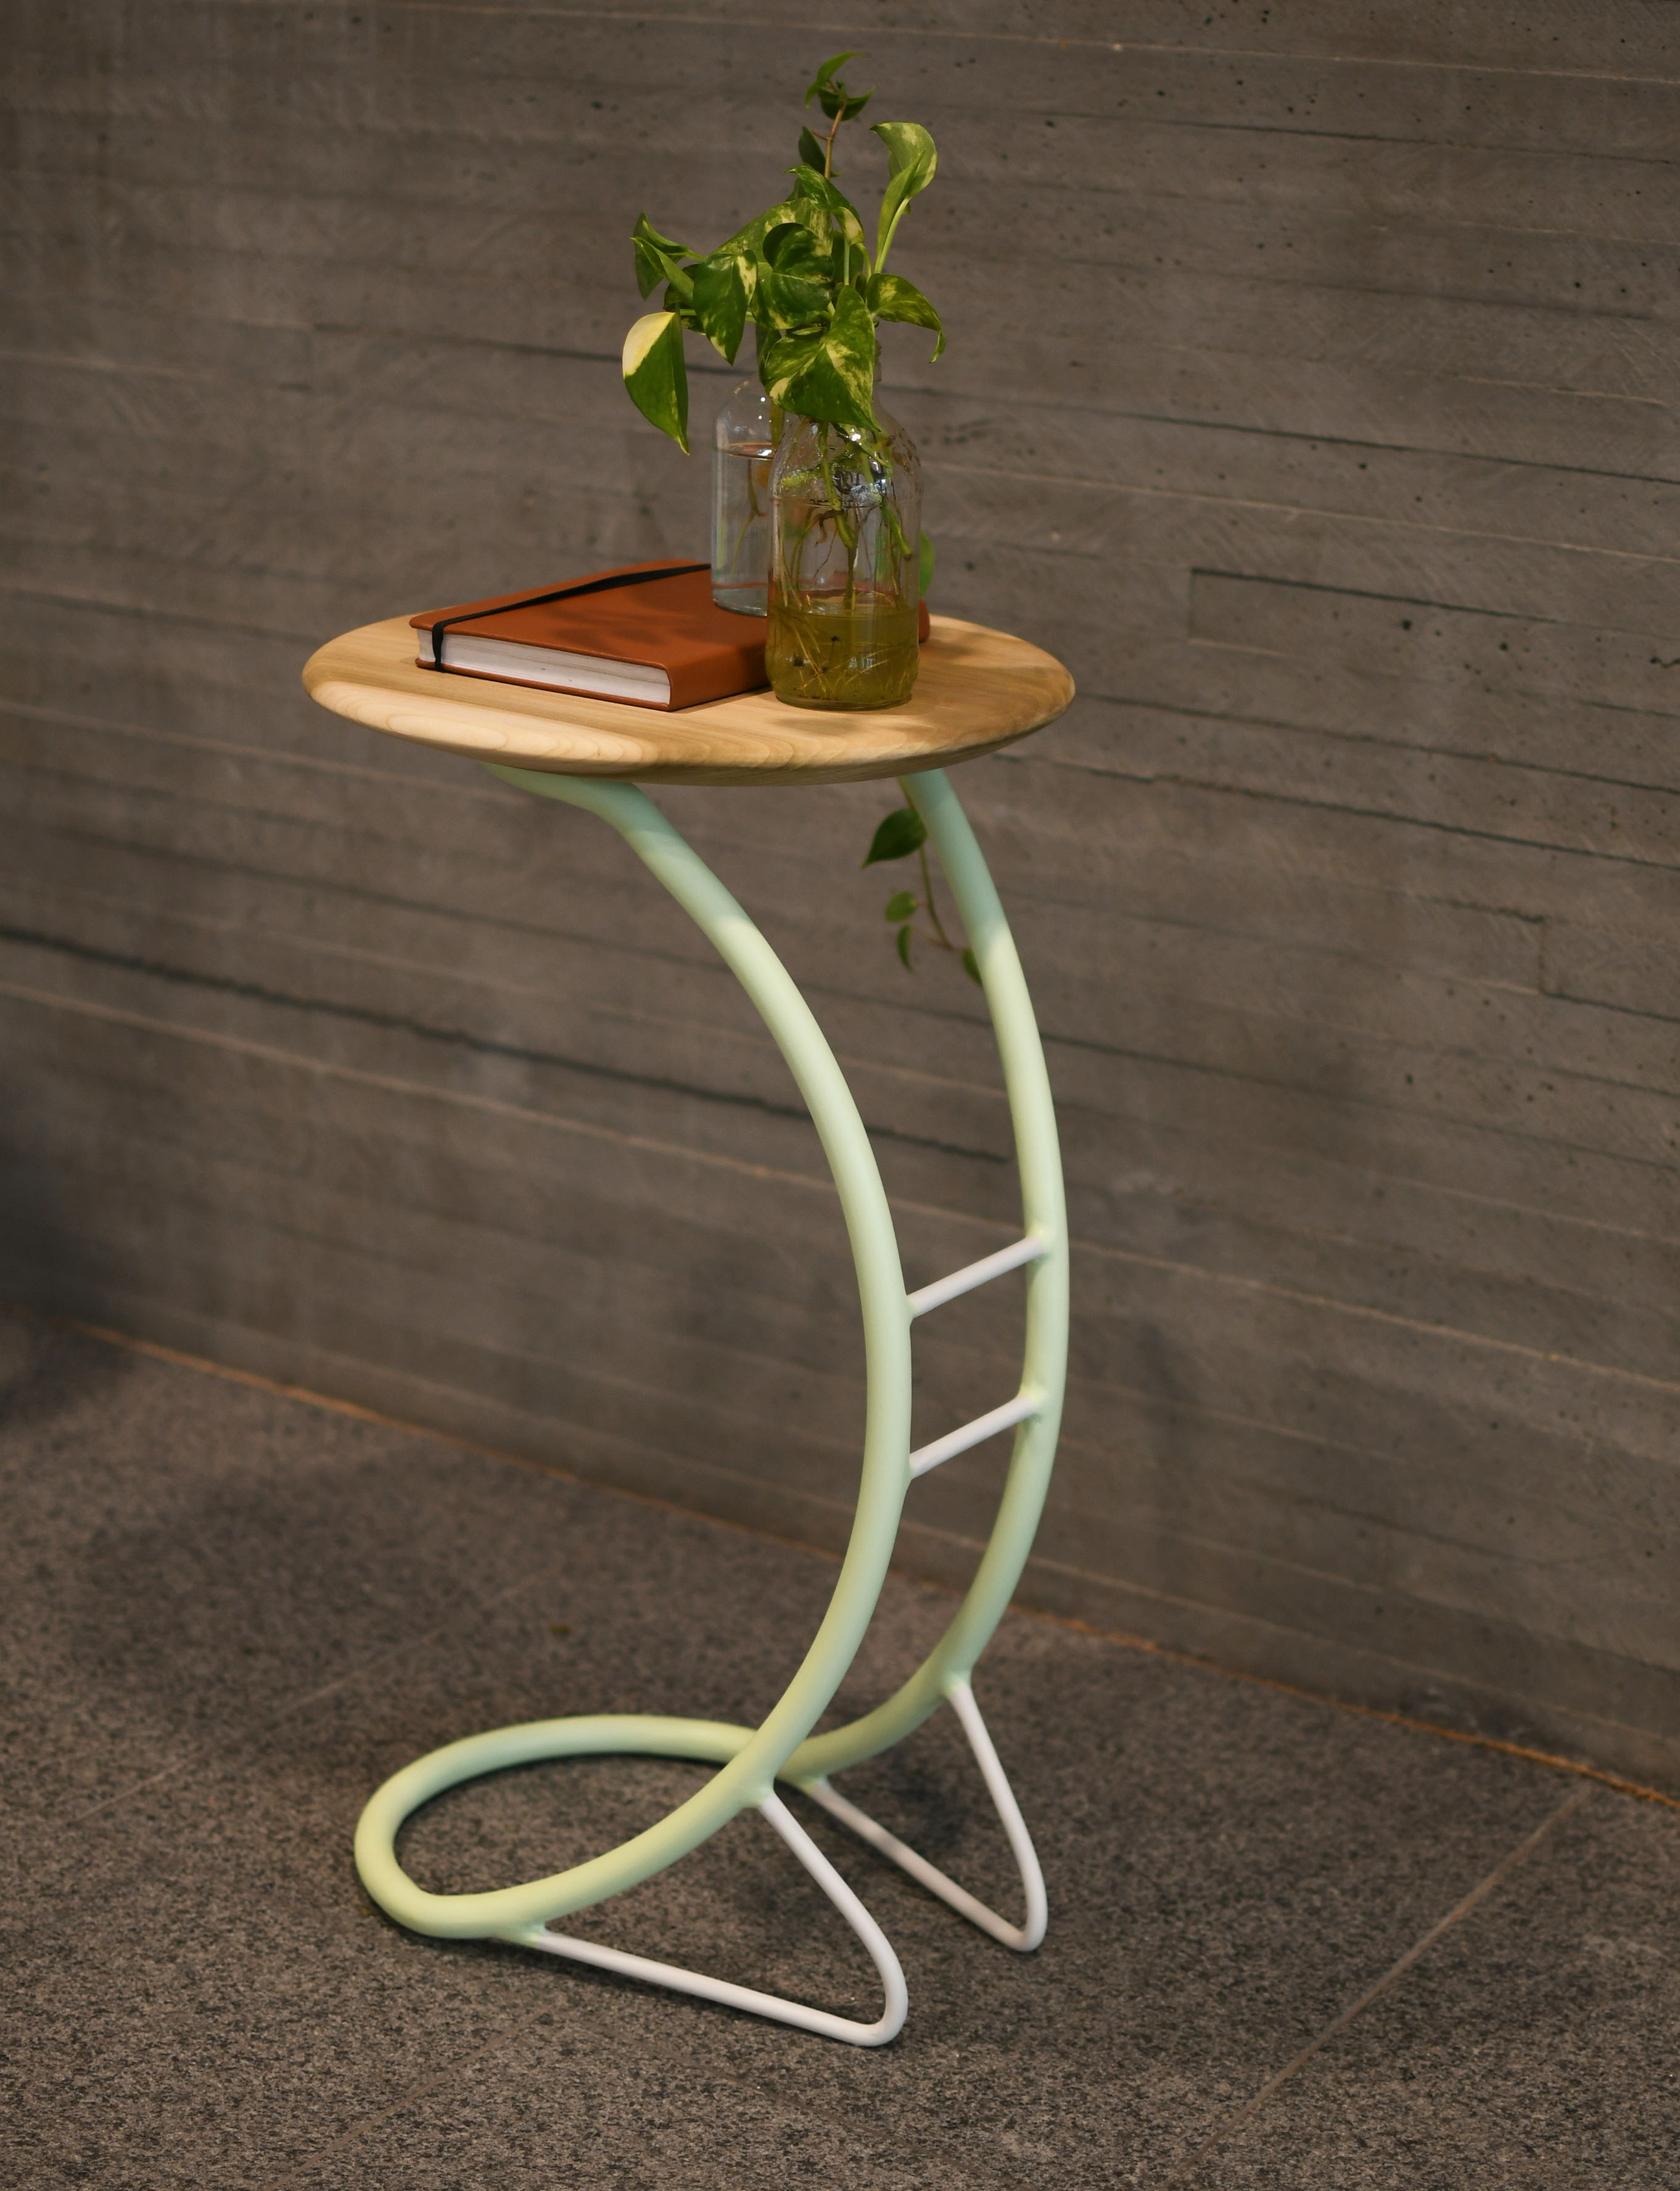 portable table design by Chloe Auf der Heide